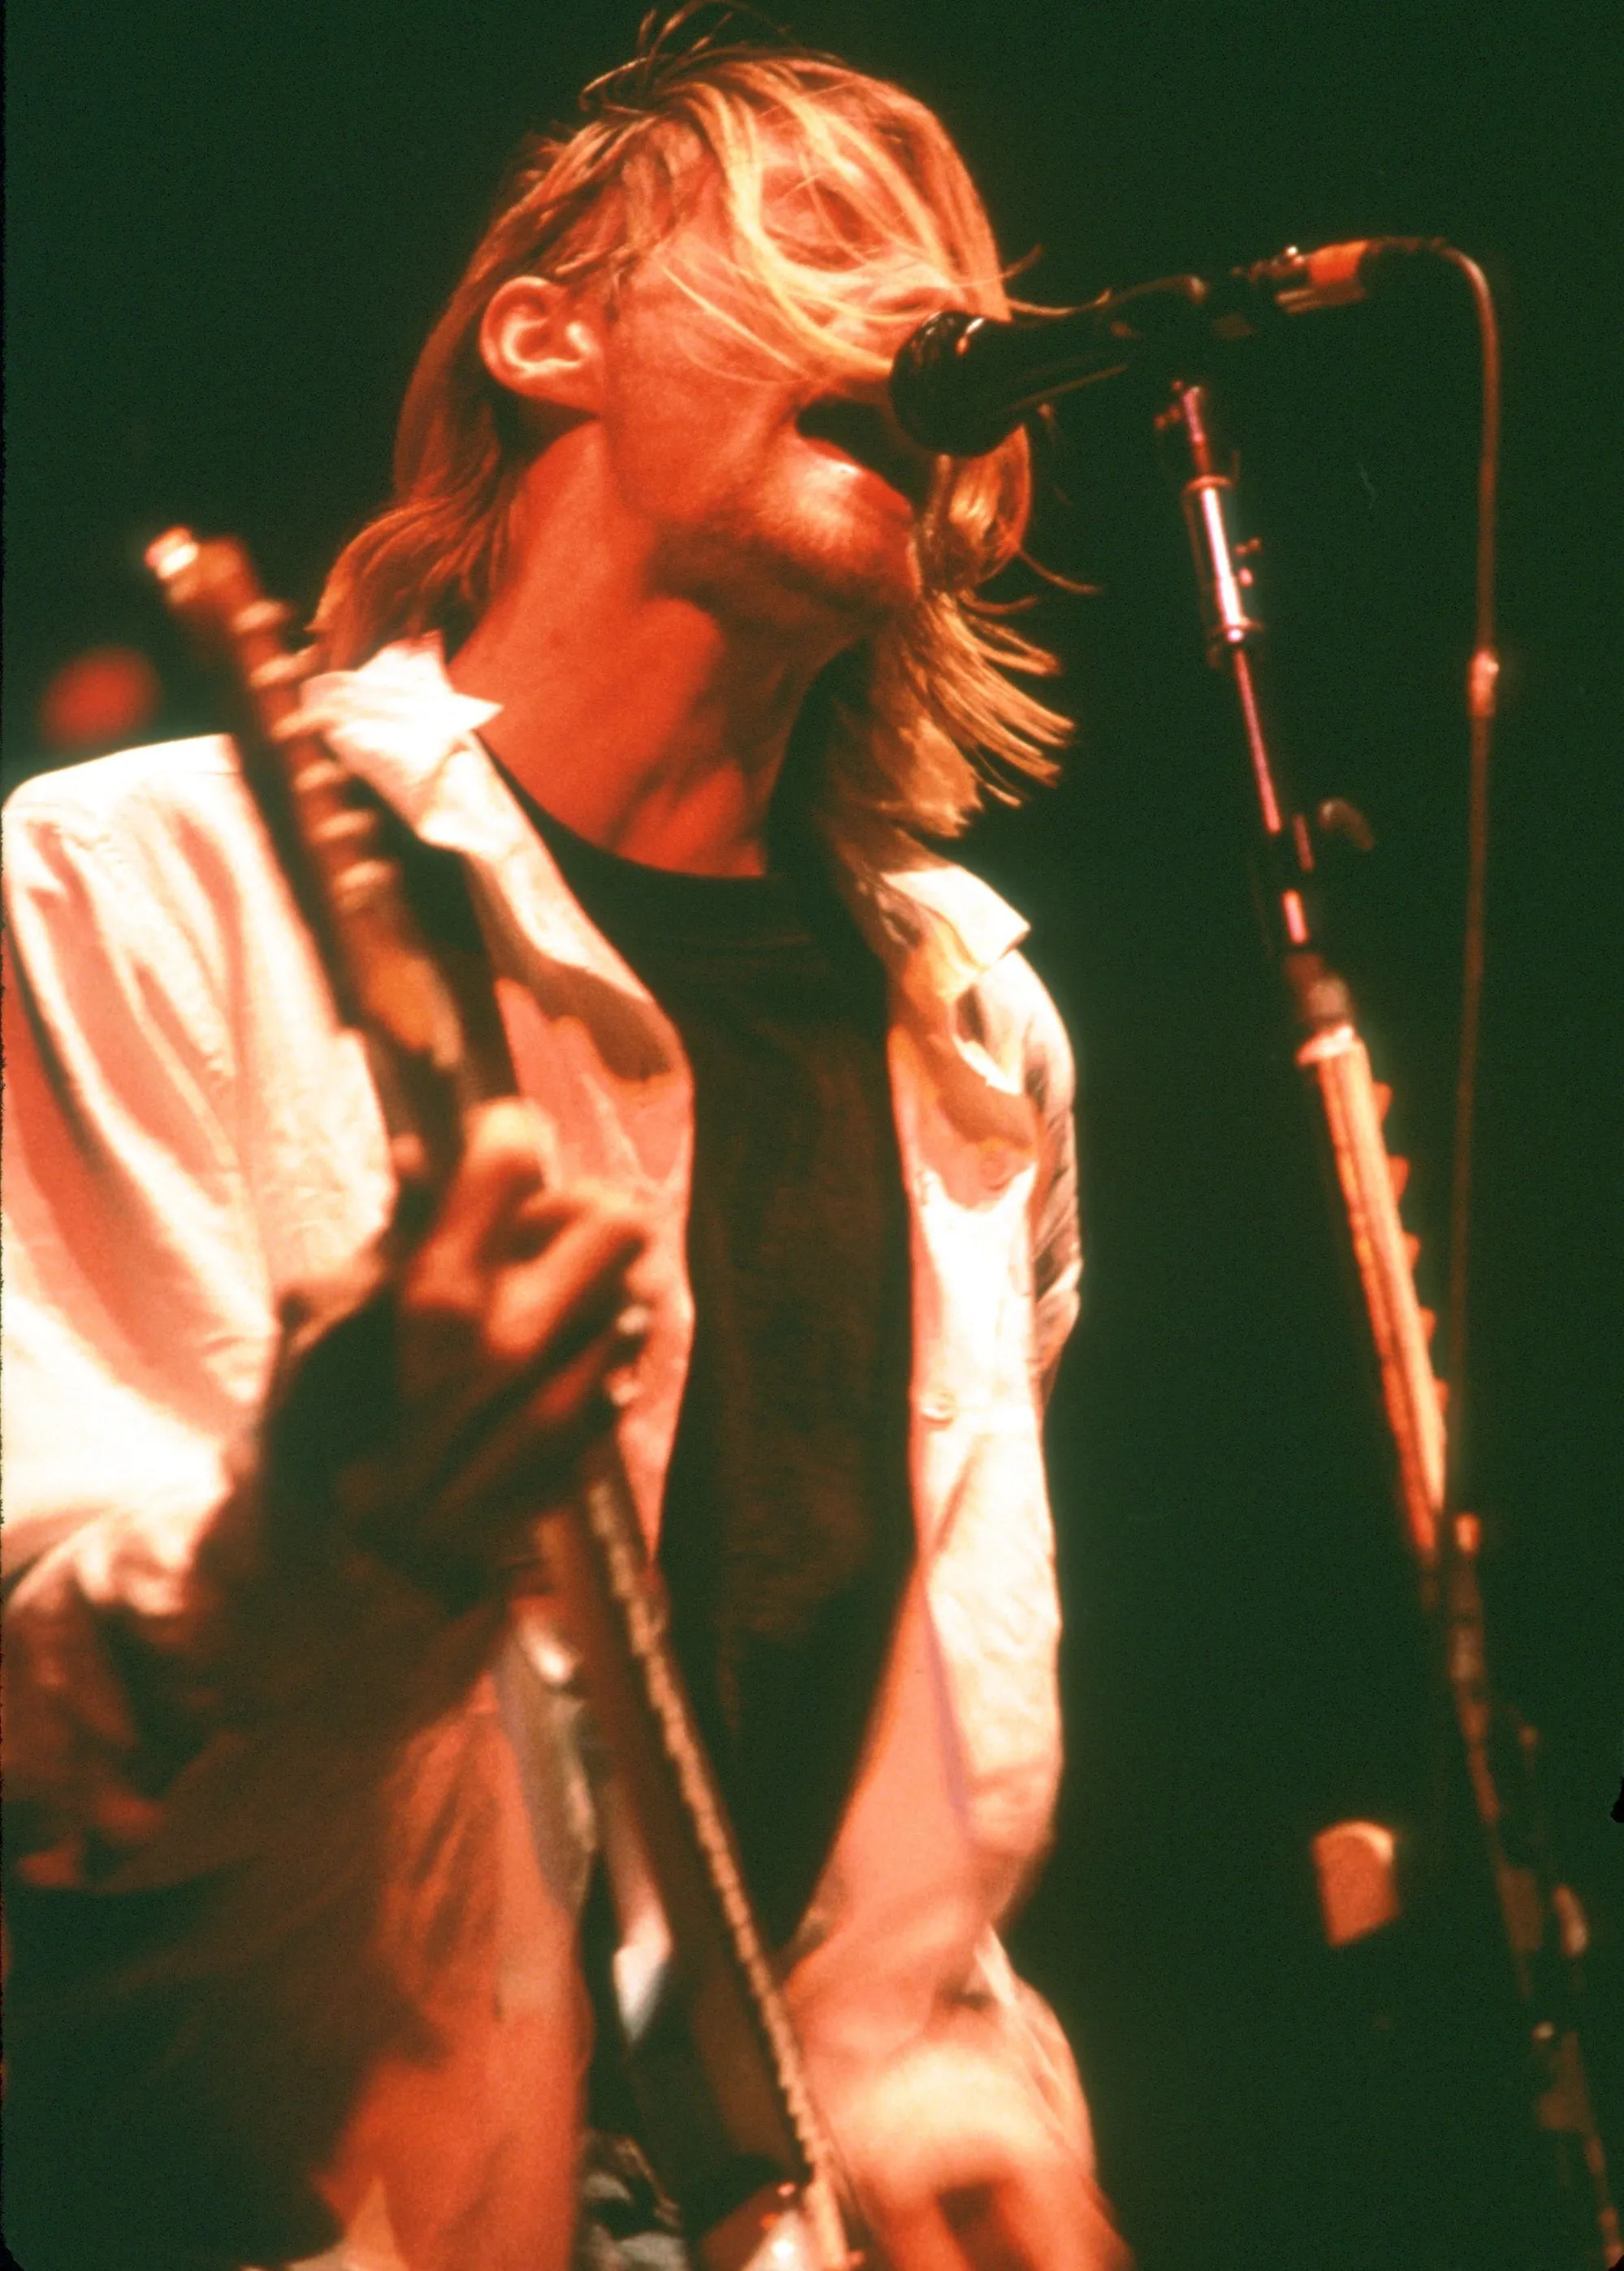 Joe Hughes, photographie de Kurt Cobain, leader du groupe Nirvana, lors d'un concert.